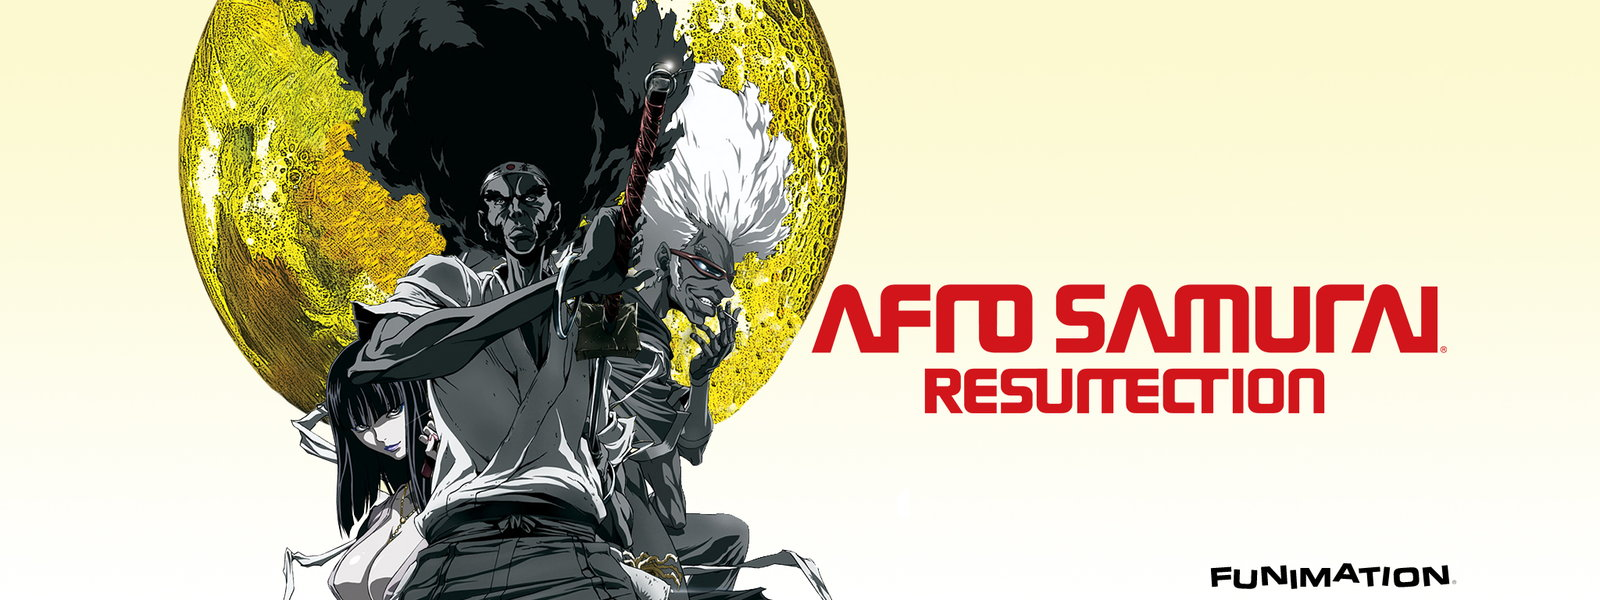 Movie Night 11 Afro Samurai Resurrection アフロサムライ レザレクション Animation Action Adventure Watch Here Steemit